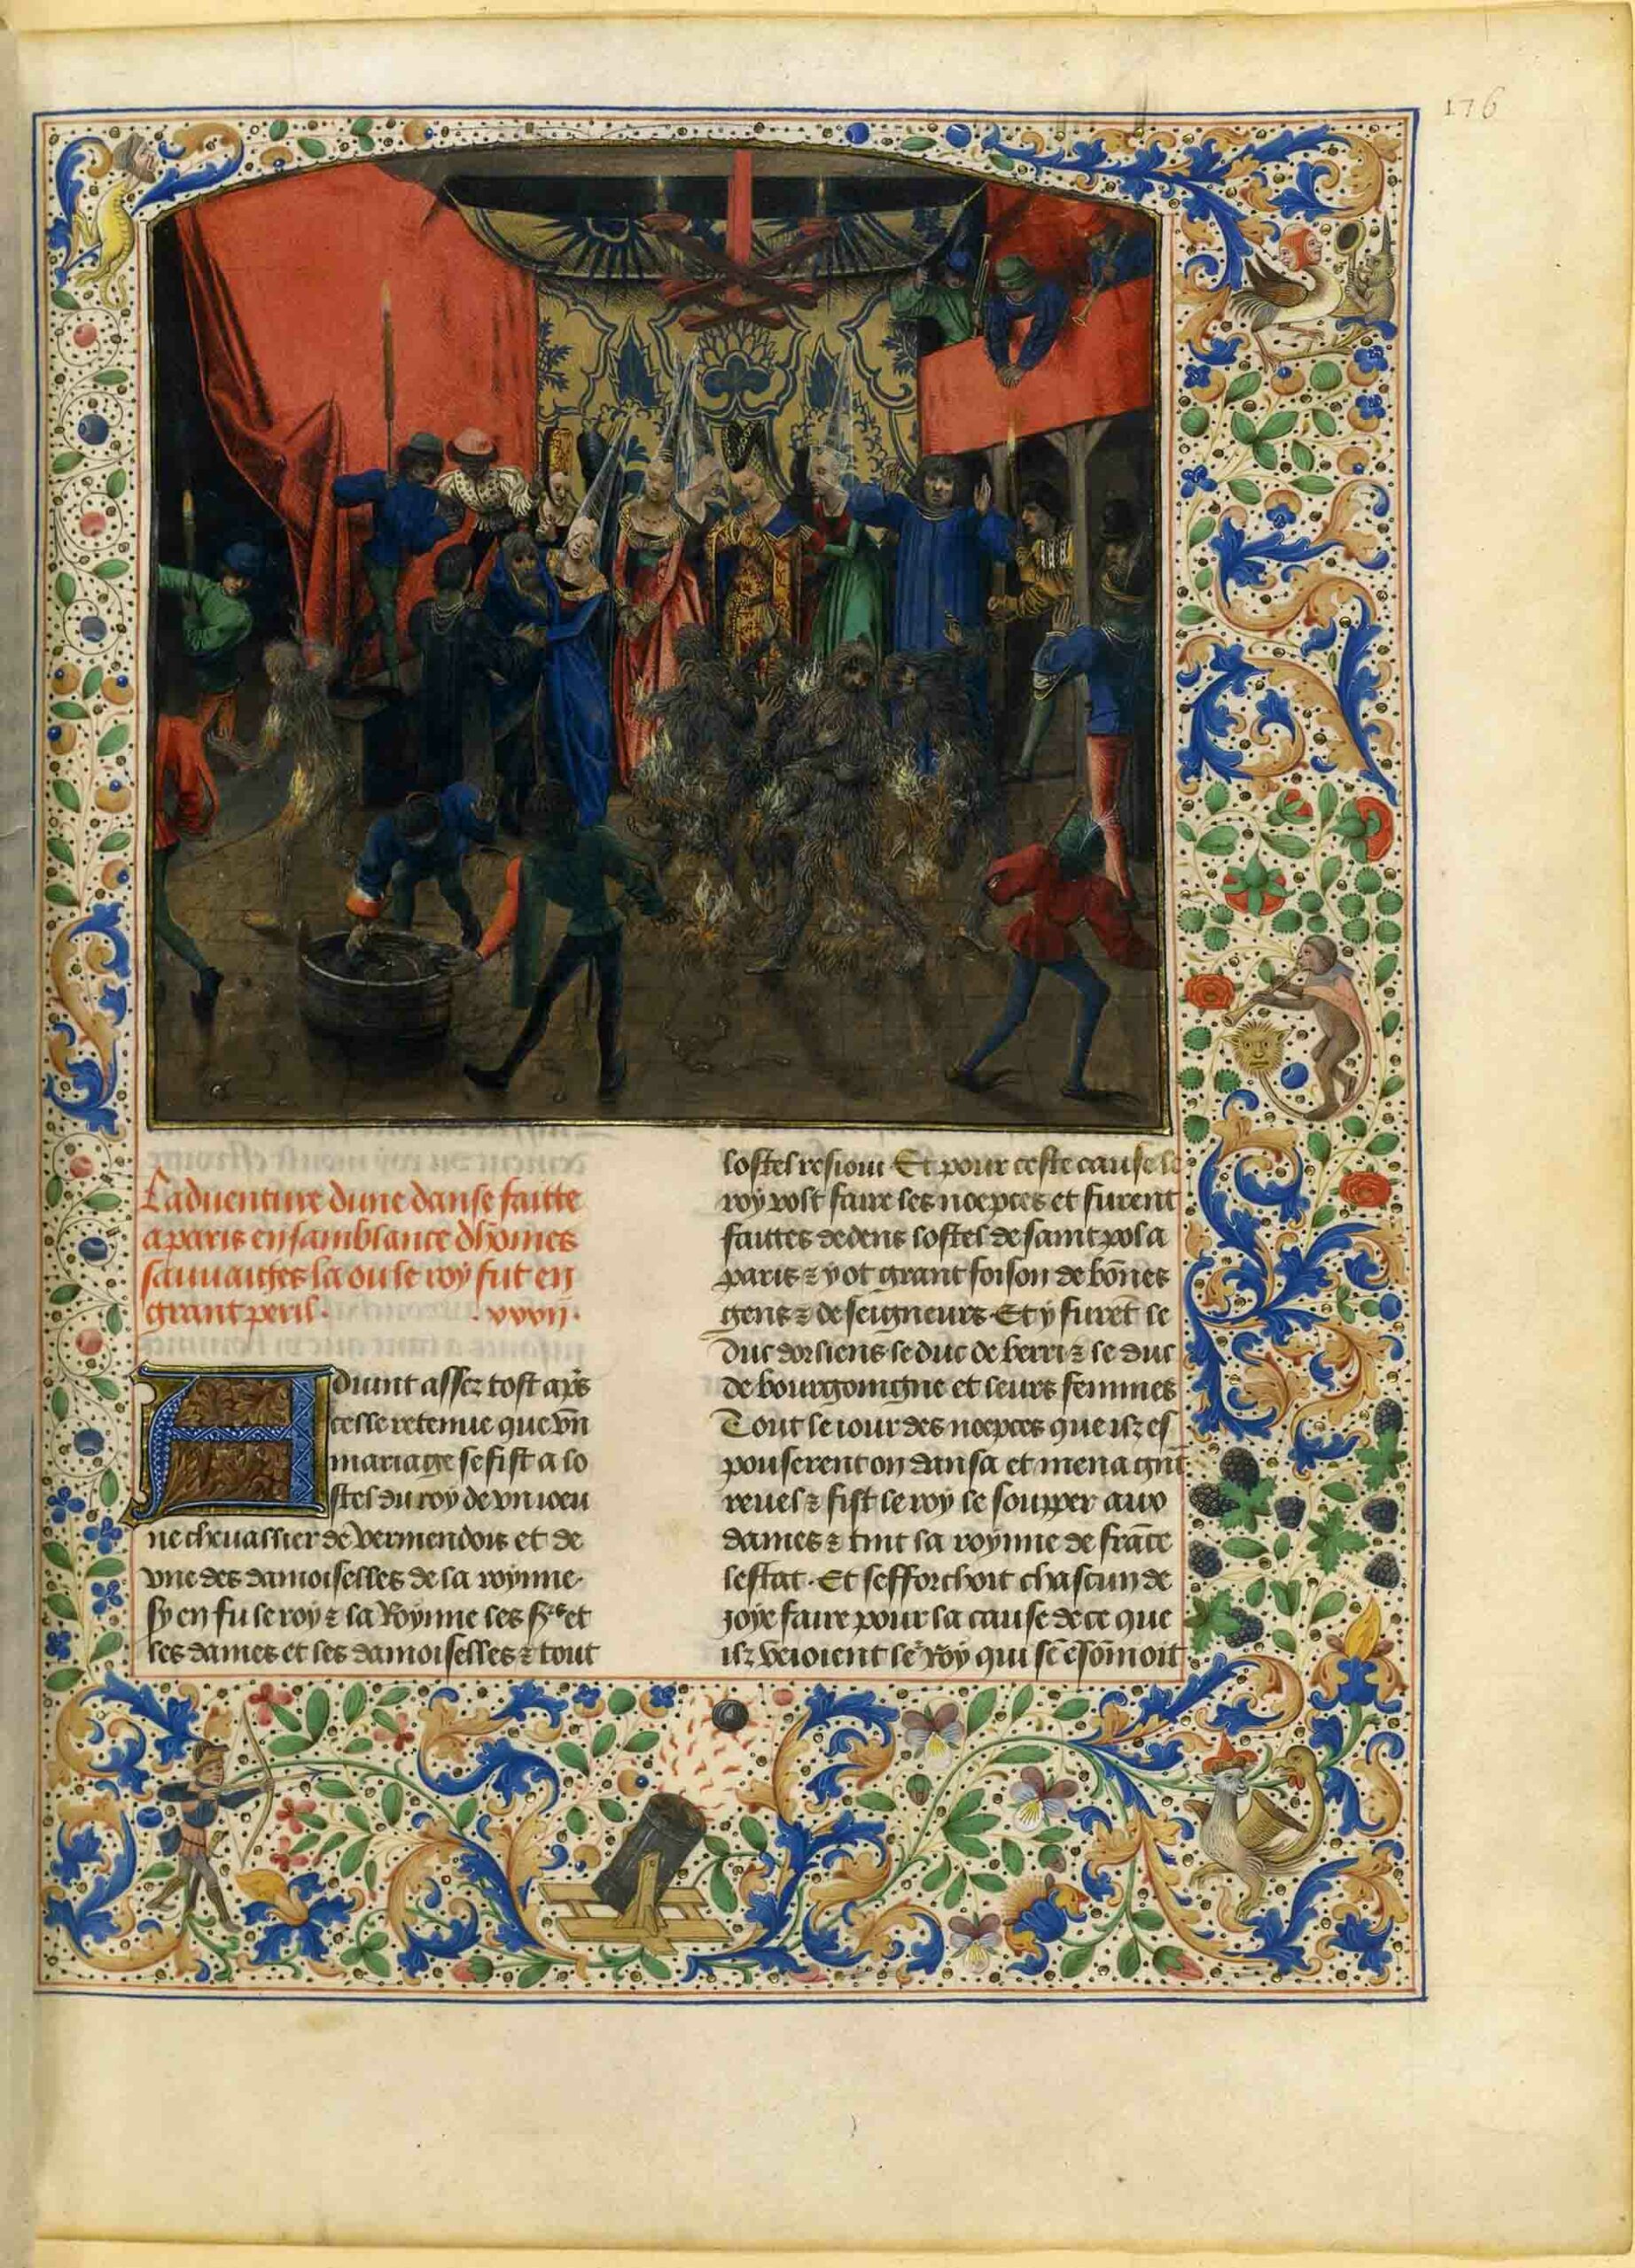 30. Bal des ardents aan het Franse hof (1393)